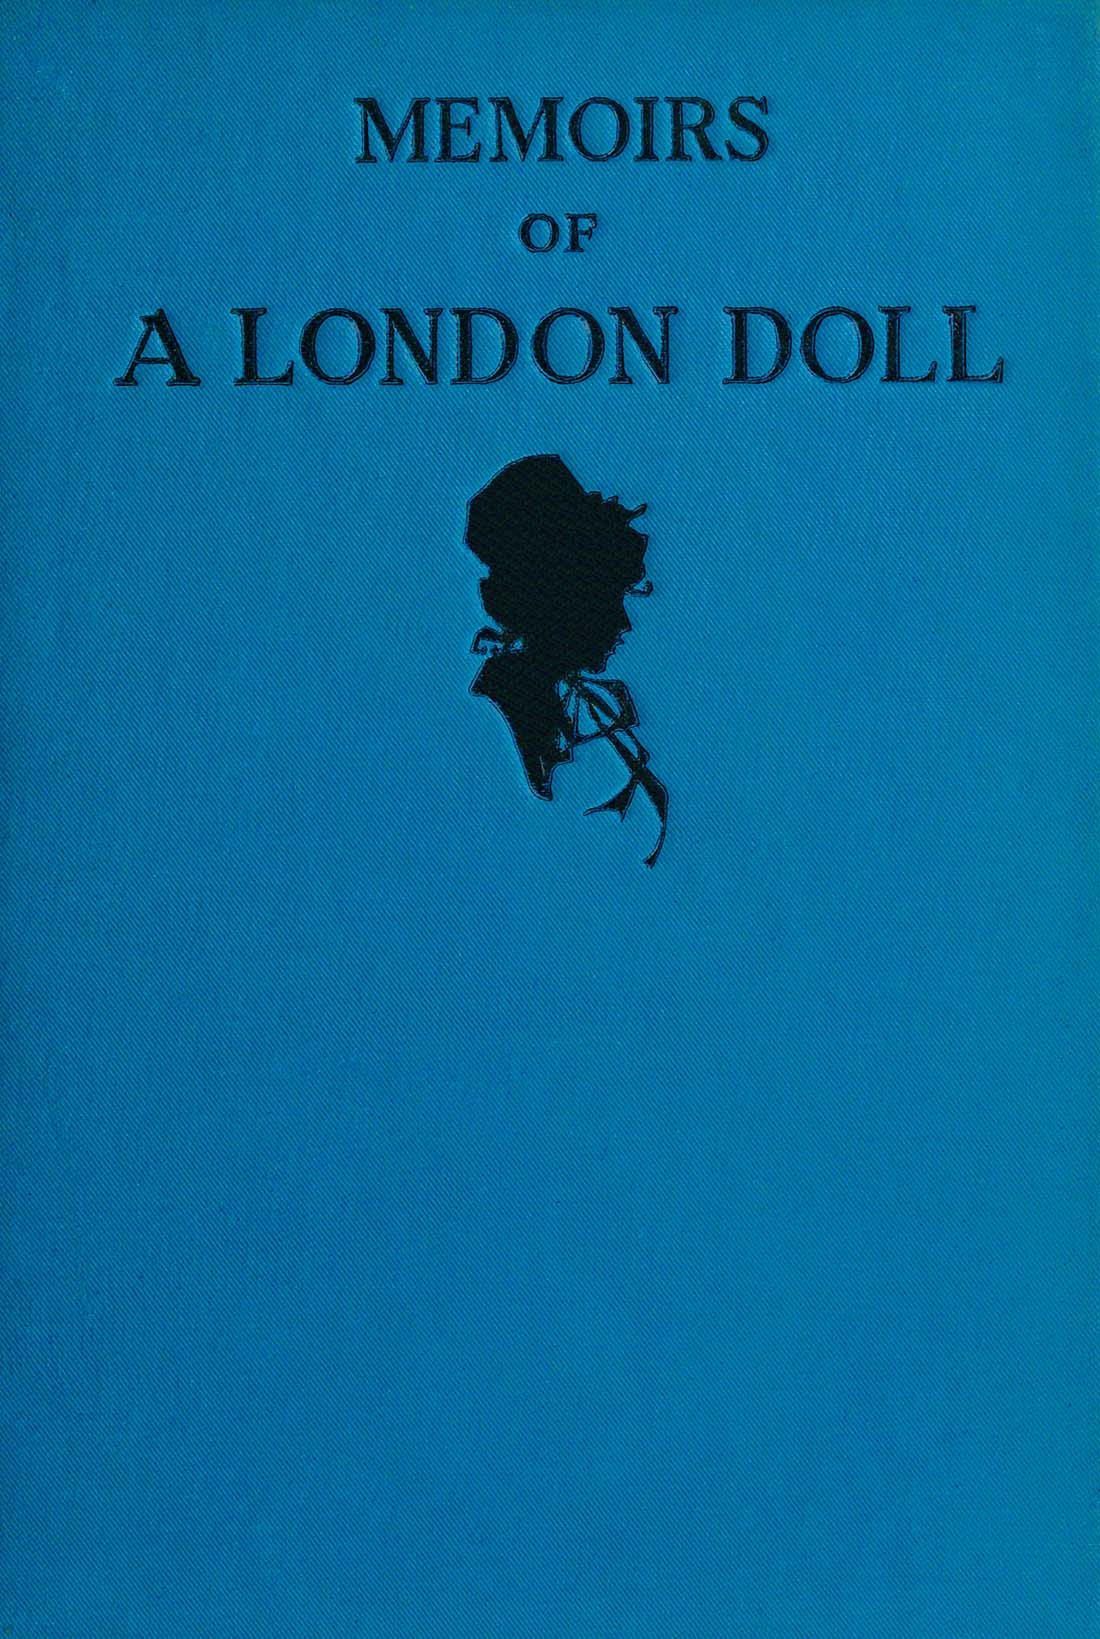 Memoirs of a London doll | Project Gutenberg